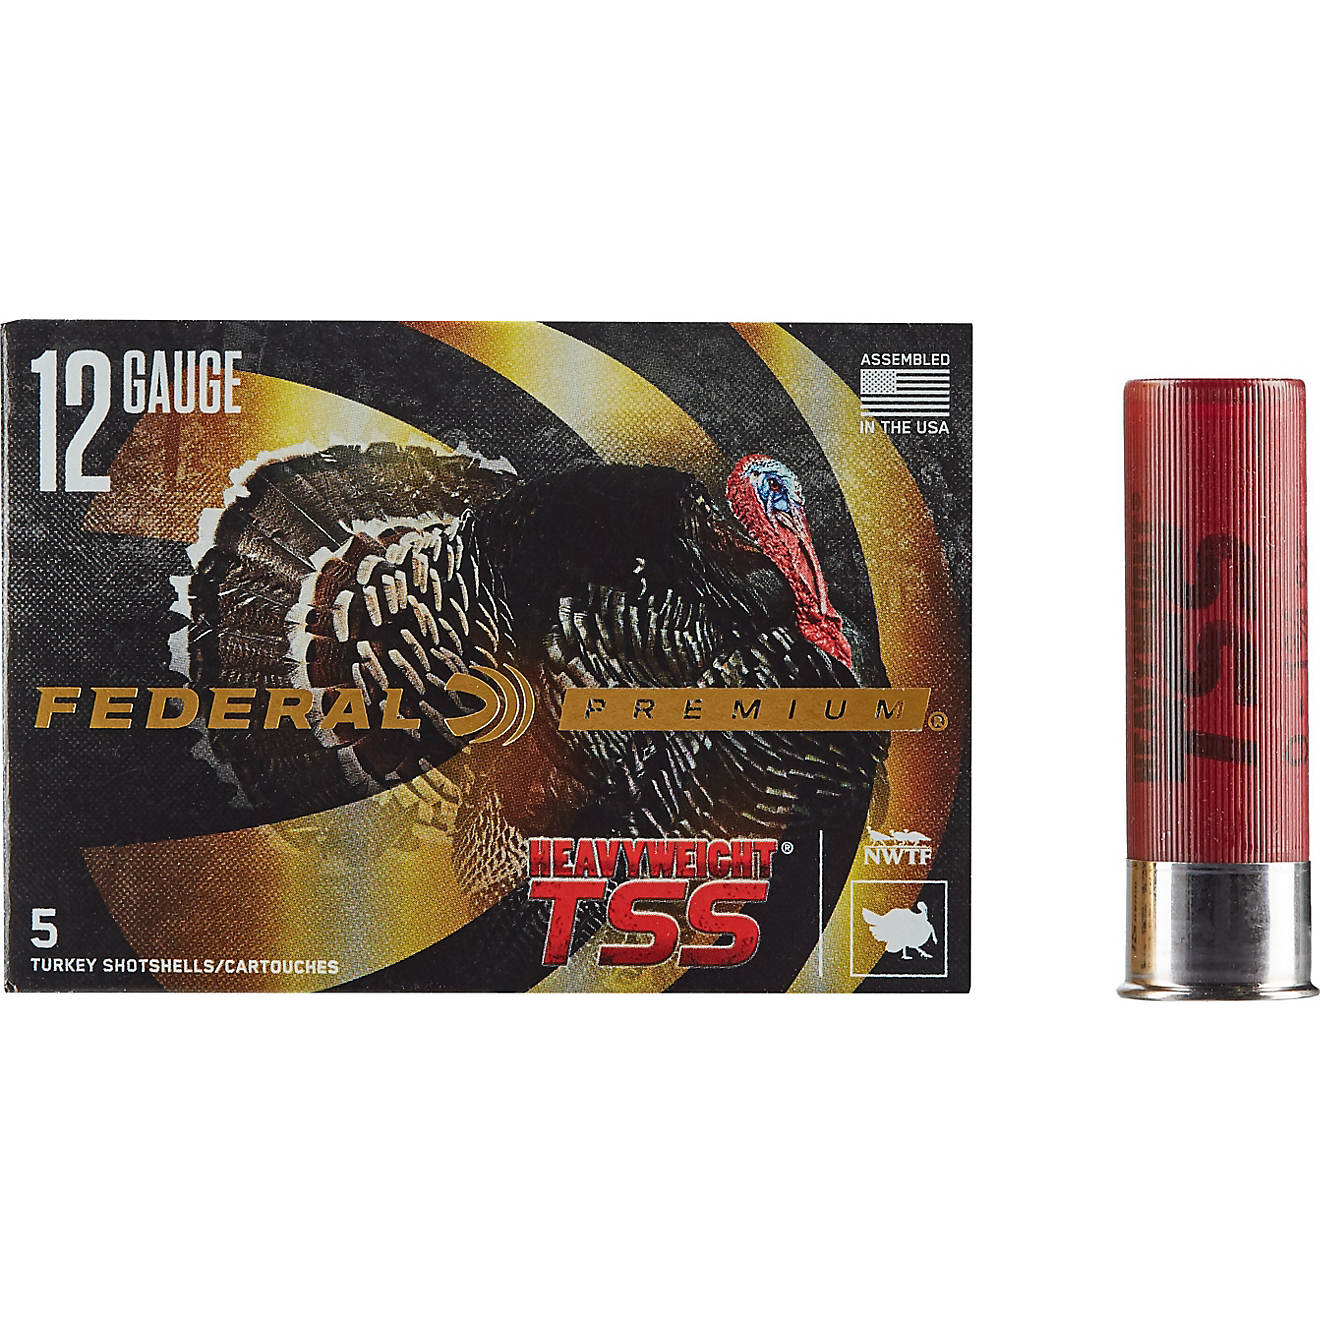 500rds of Federal Premium TSS Heavyweight 12 Gauge Turkey Shotshells